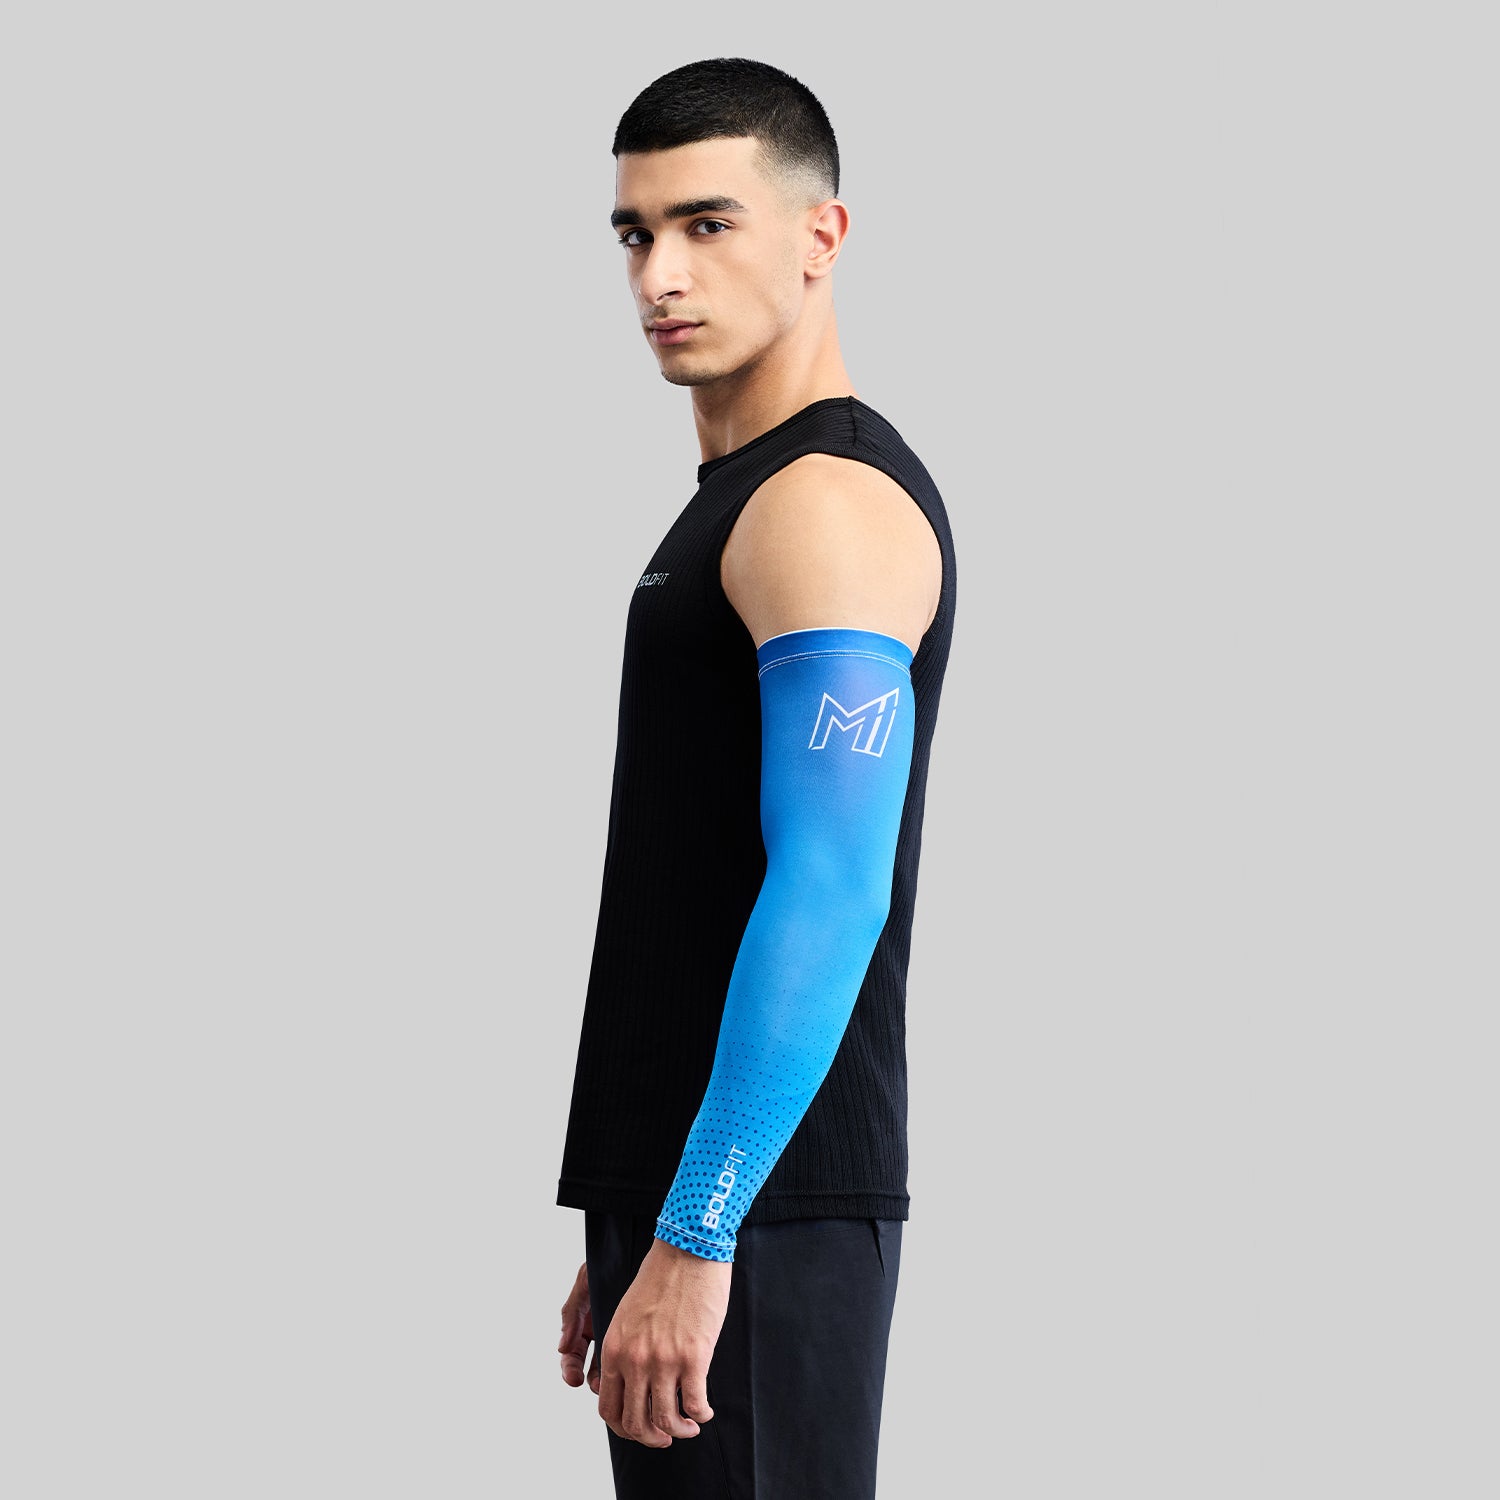 Official MI Merch - Arm Sleeve